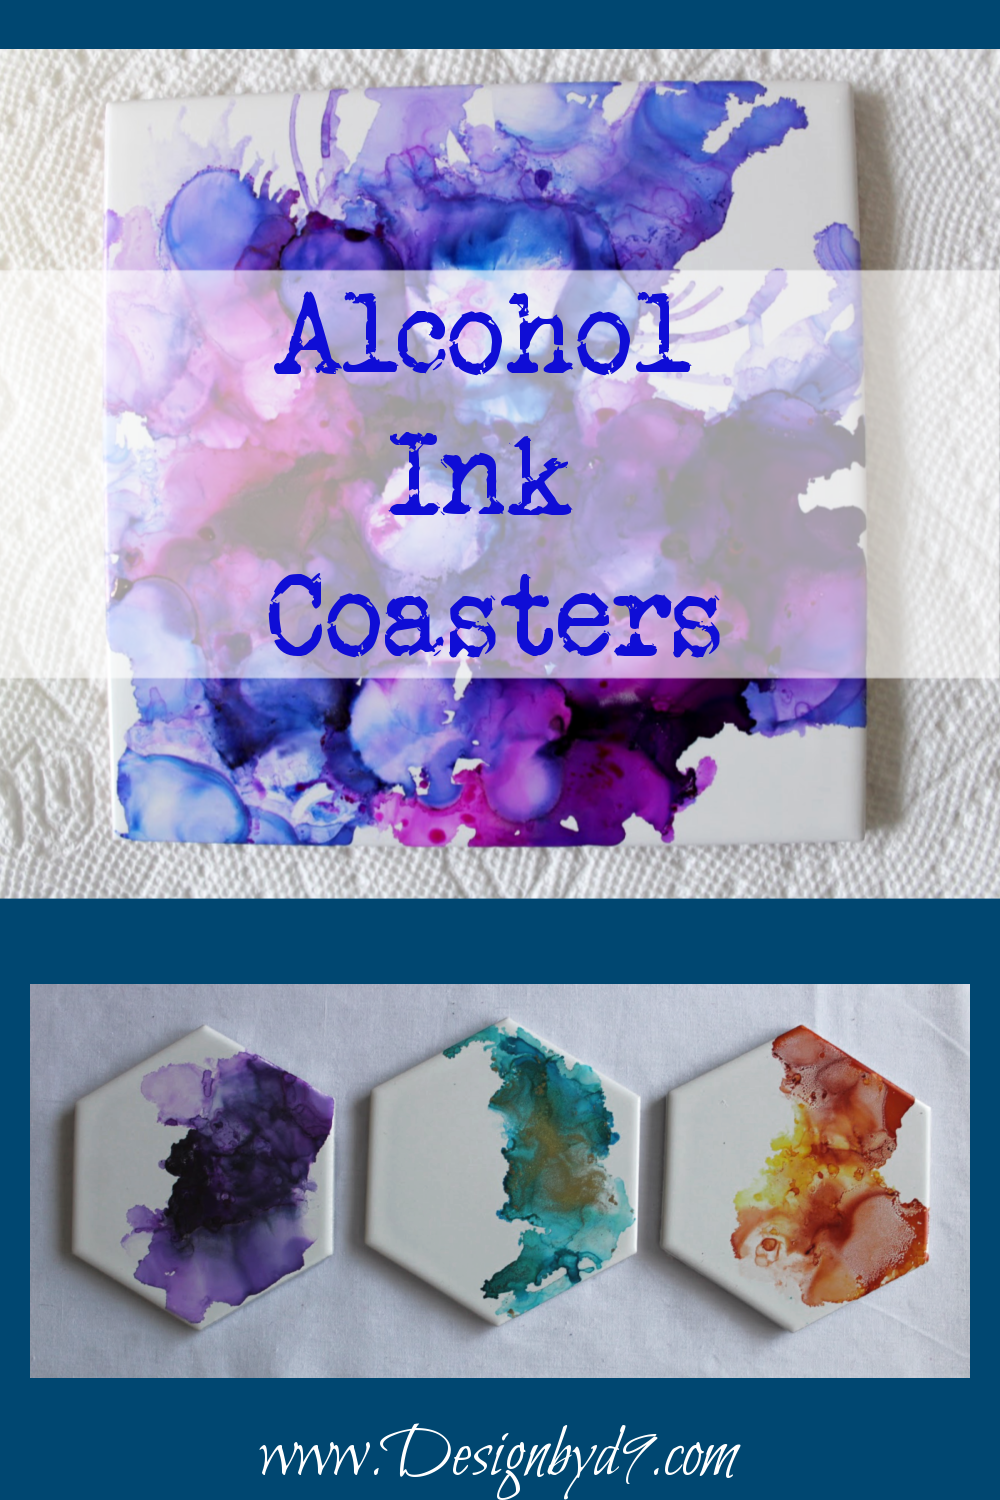 1 Alcohol ink coaster